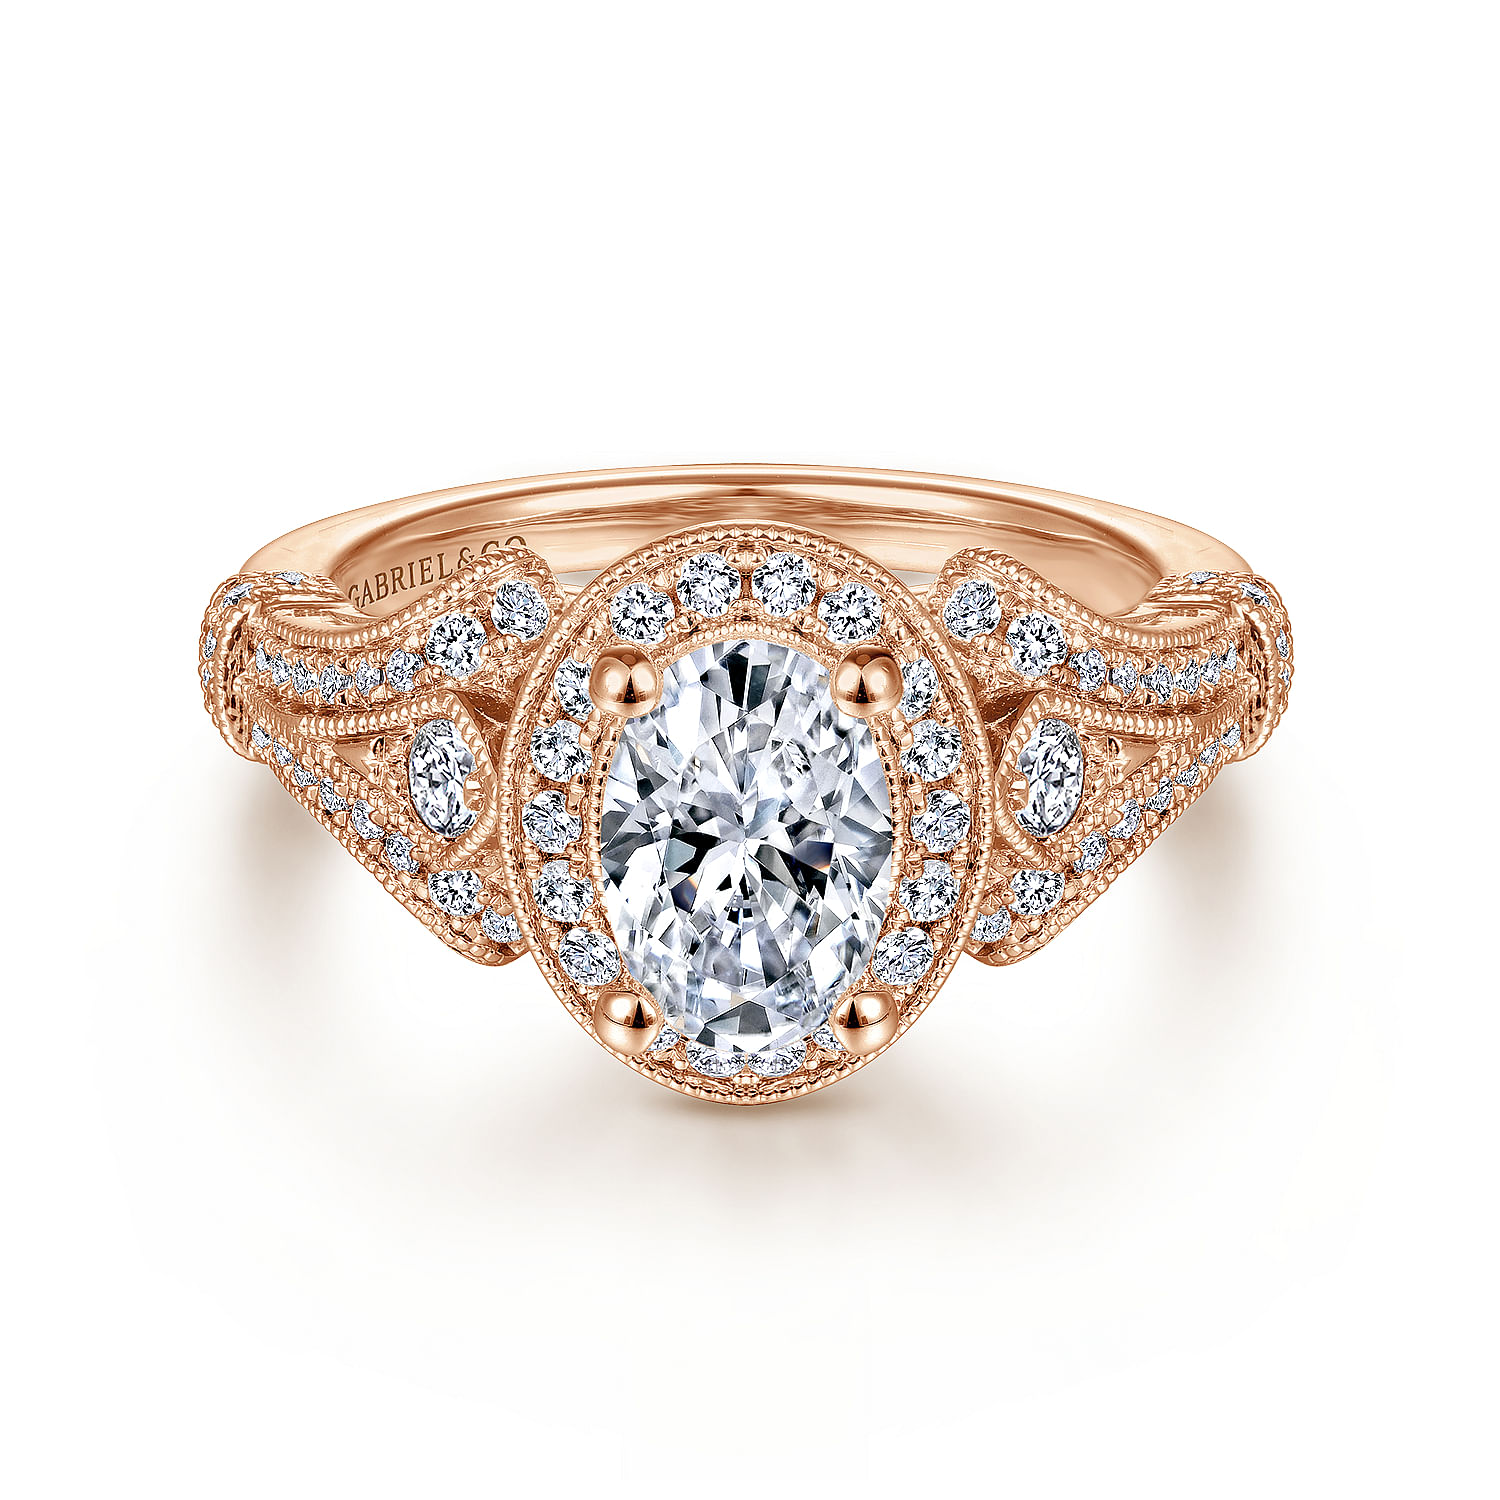 Vintage Inspired 14K Rose Gold Oval Halo Diamond Engagement Ring